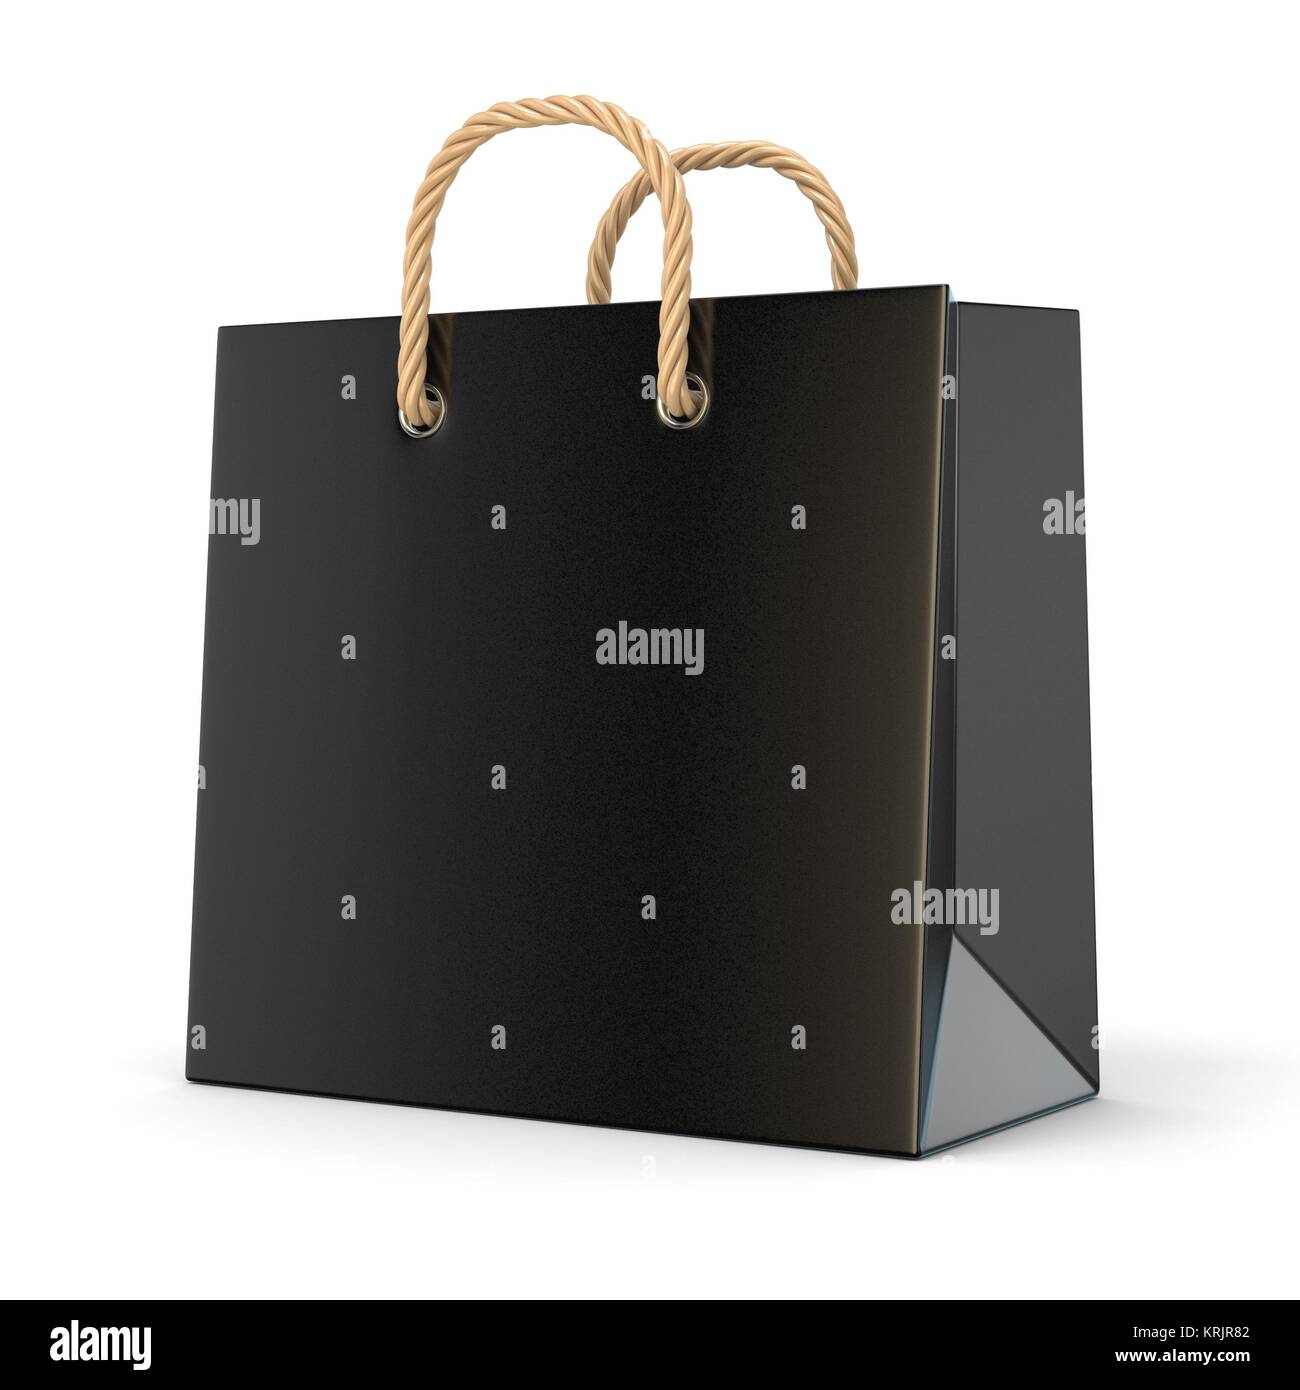 2,001 Personal Shopper Bag Images, Stock Photos, 3D objects, & Vectors